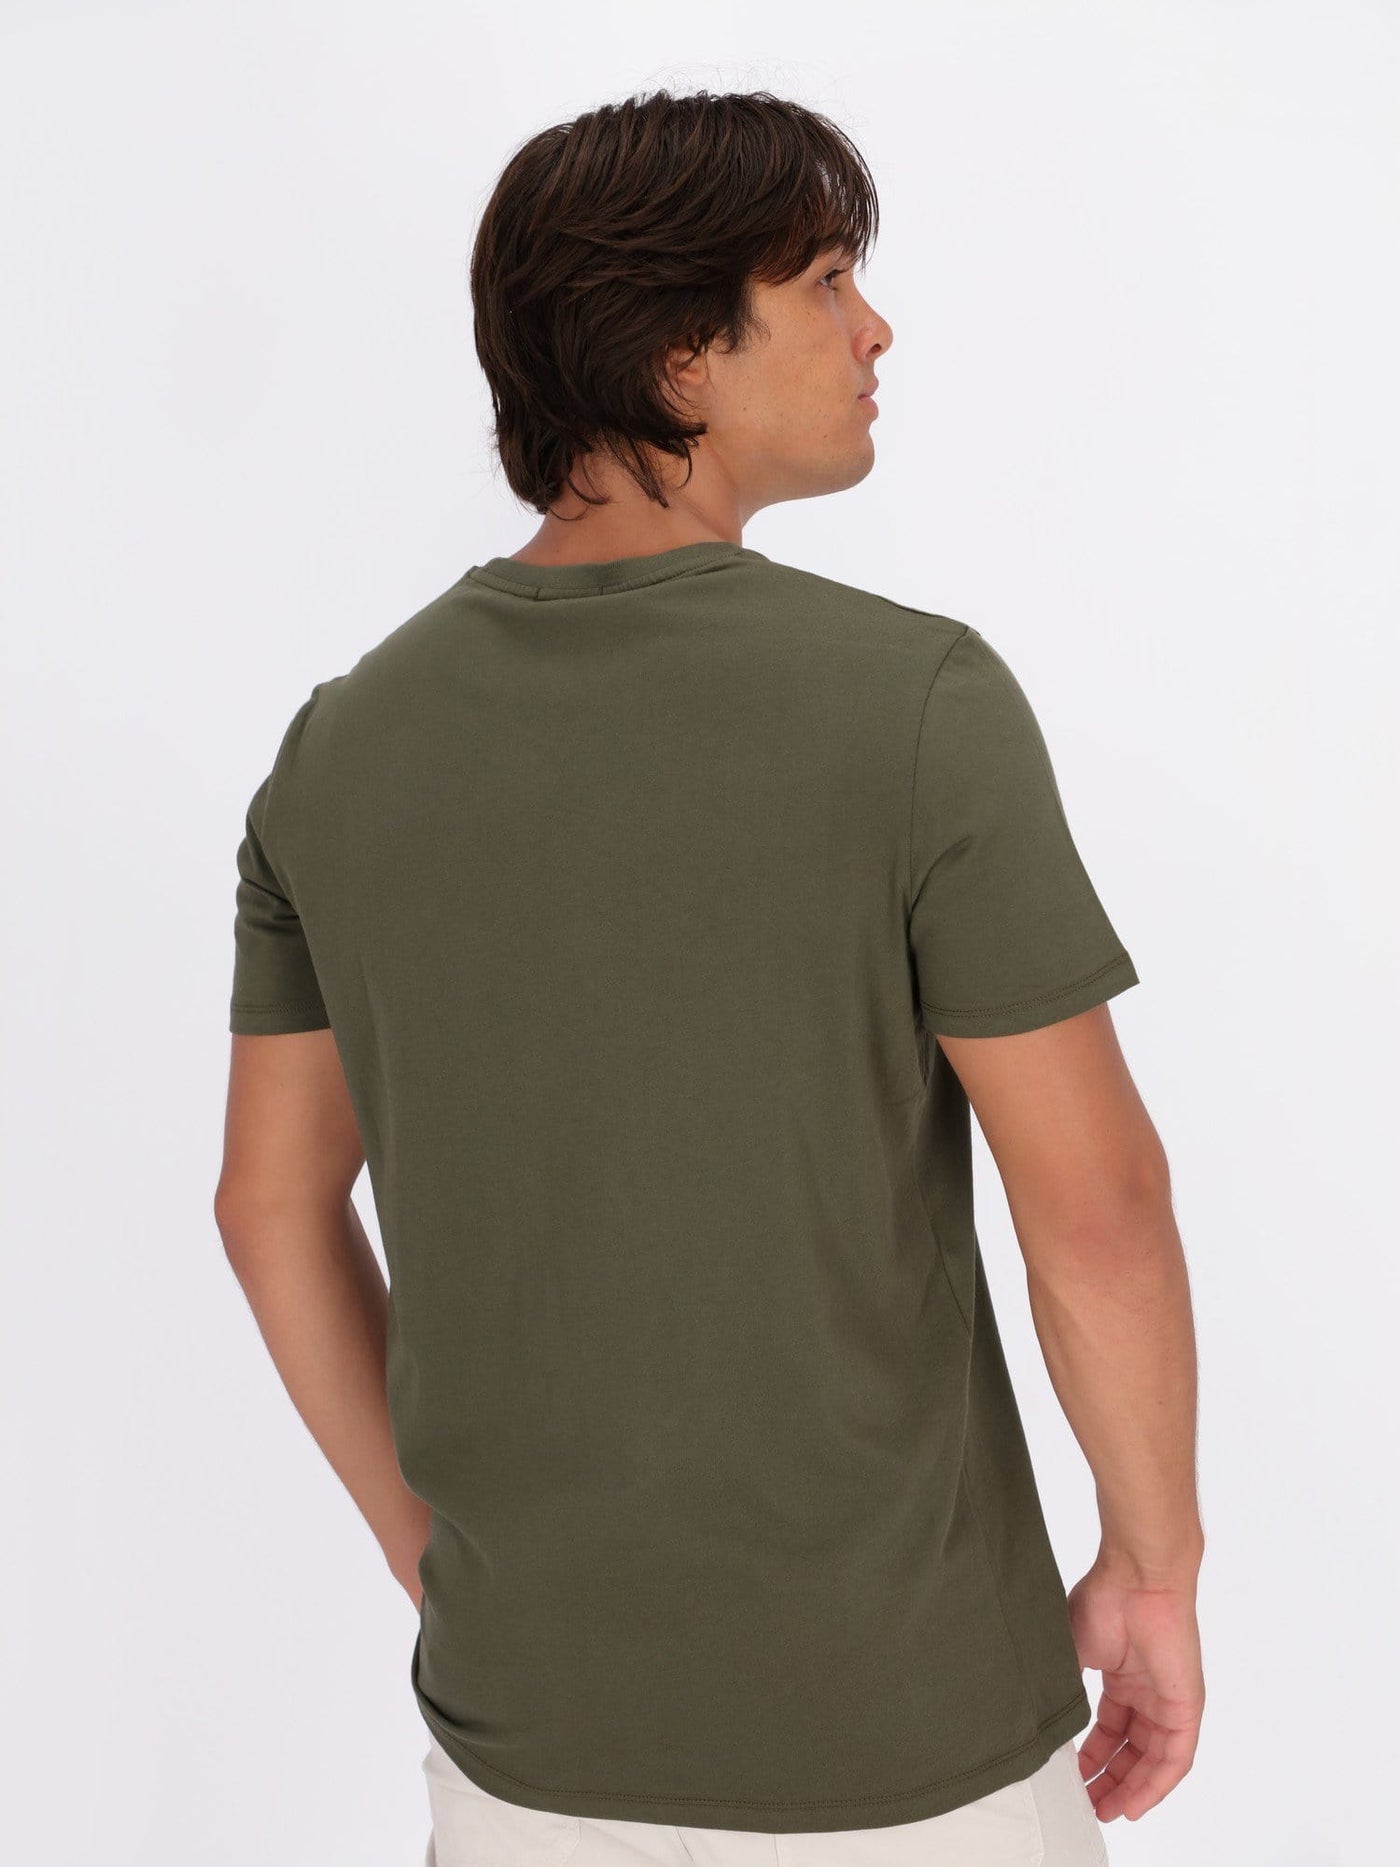 OR T-Shirts Basic V-Neck Slim Fit T-Shirt